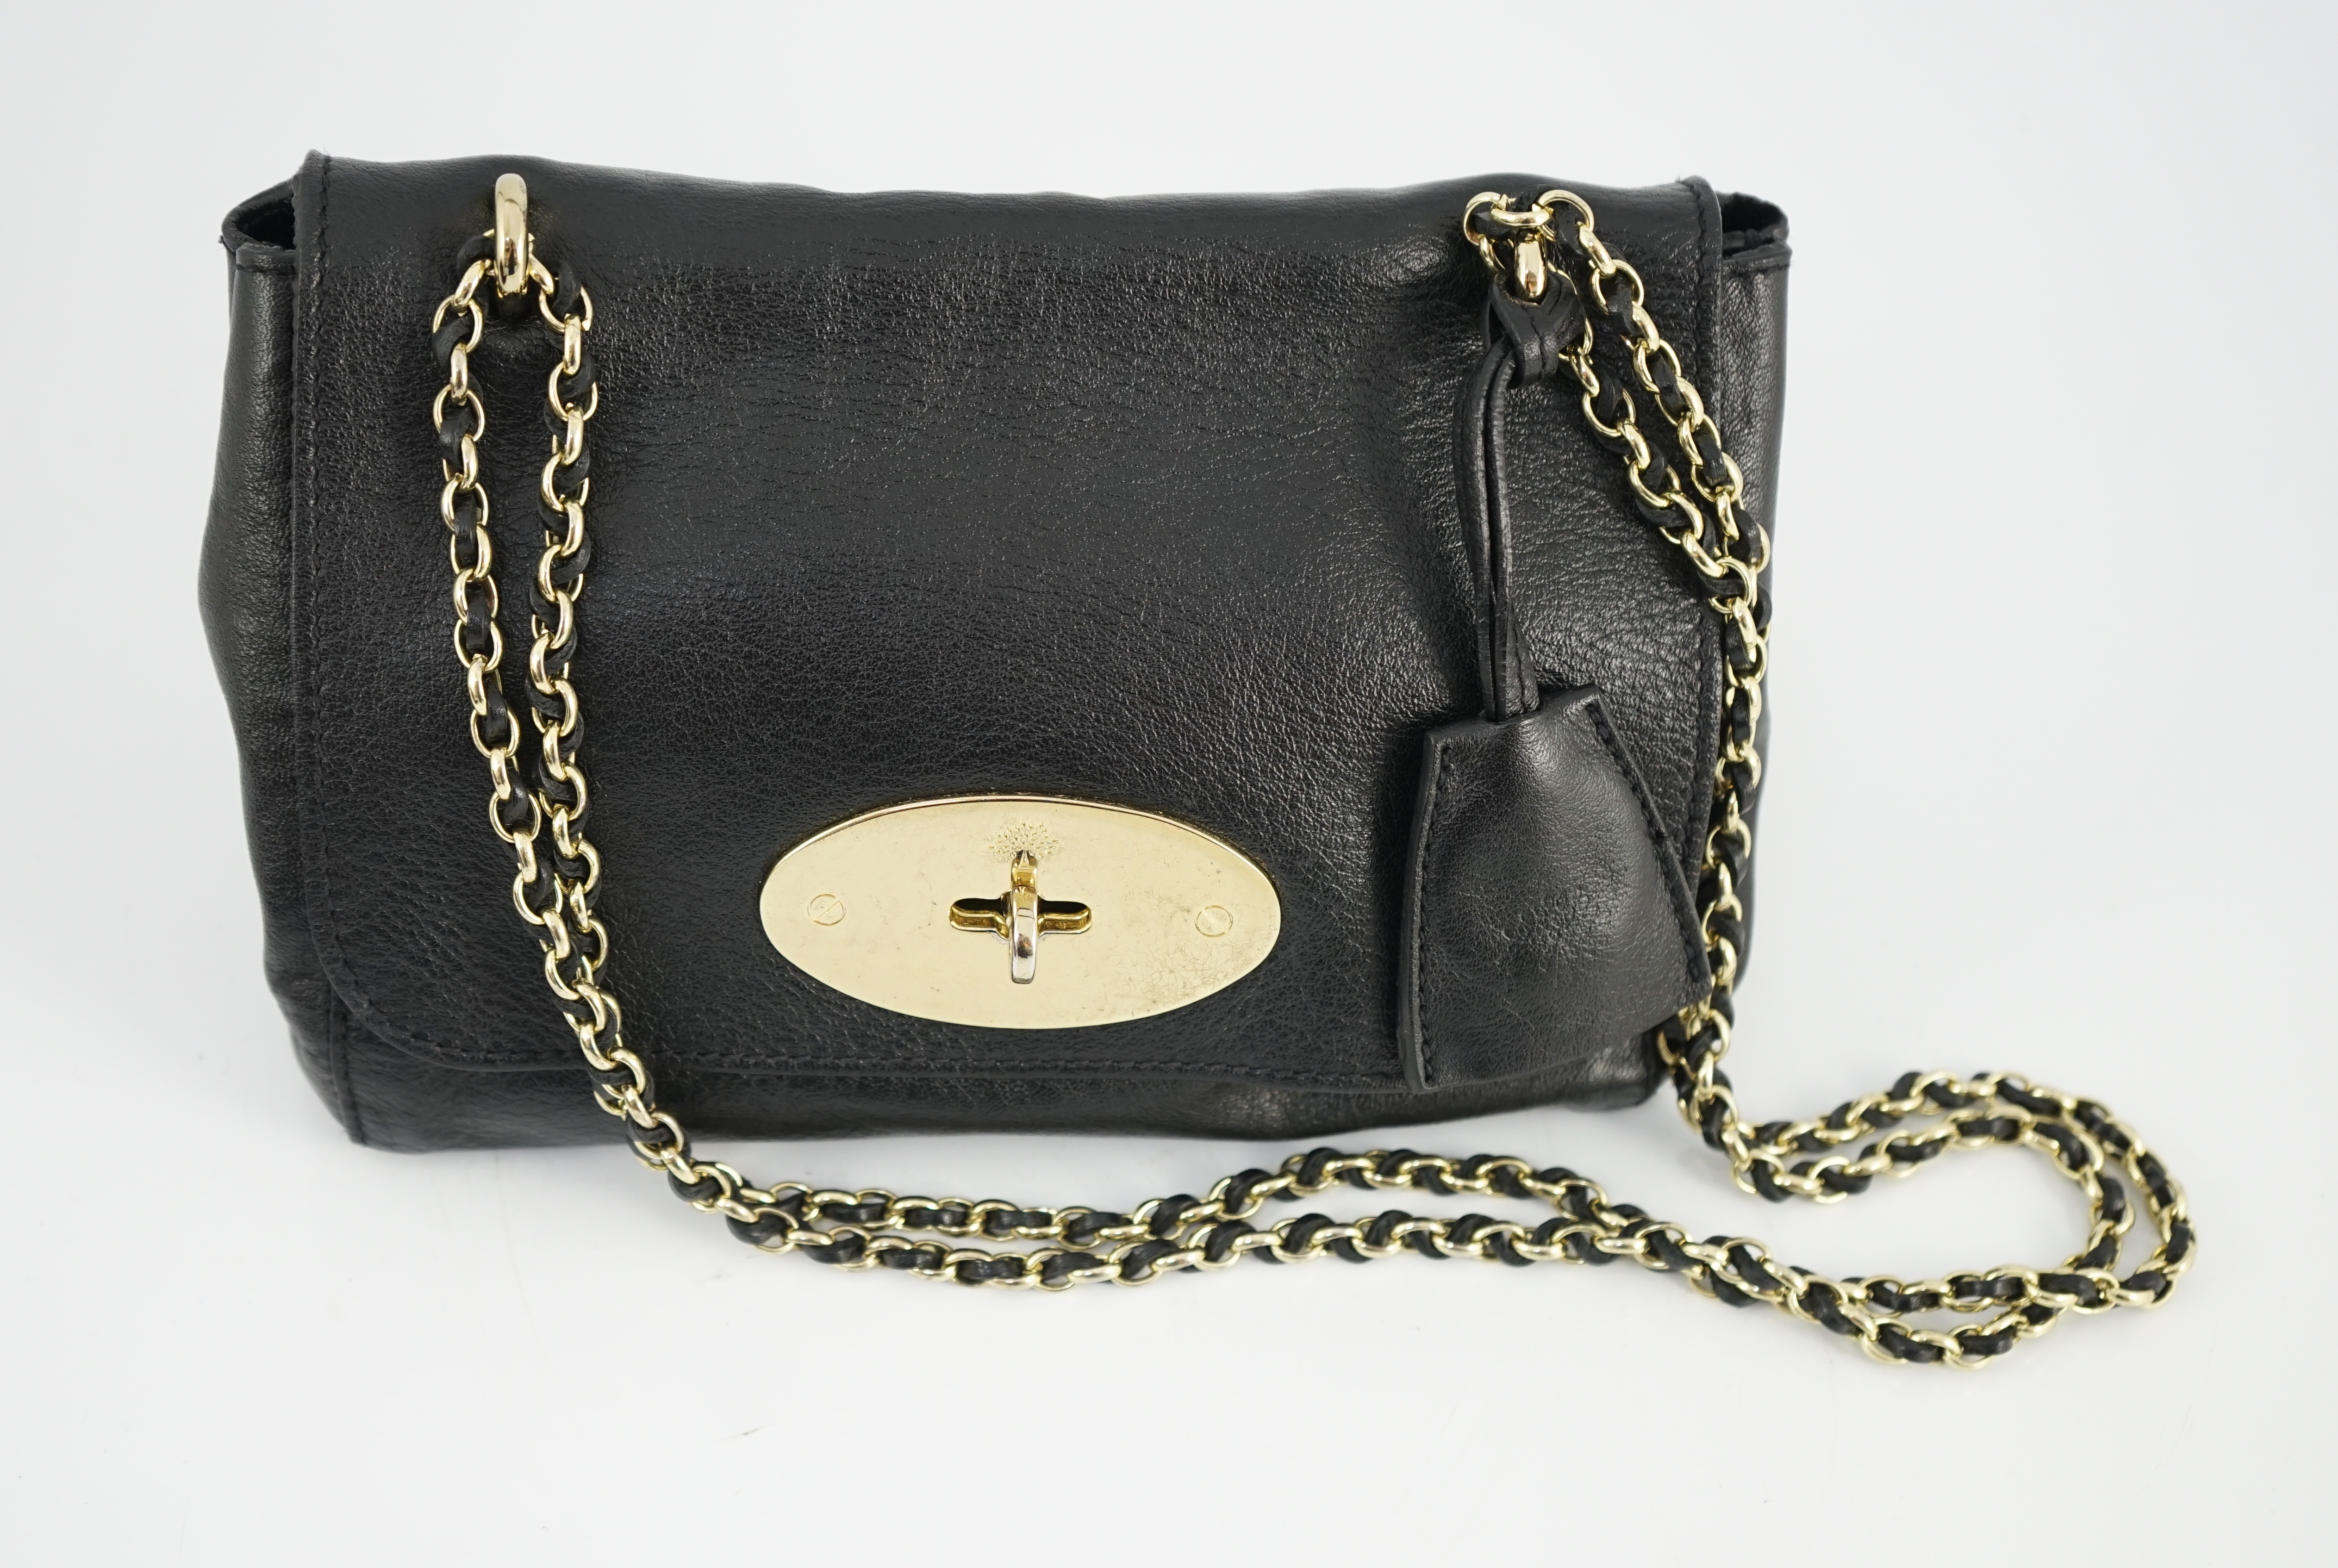 A Mulberry small Lily black leather handbag width 20cm, depth 6cm, height 14cm